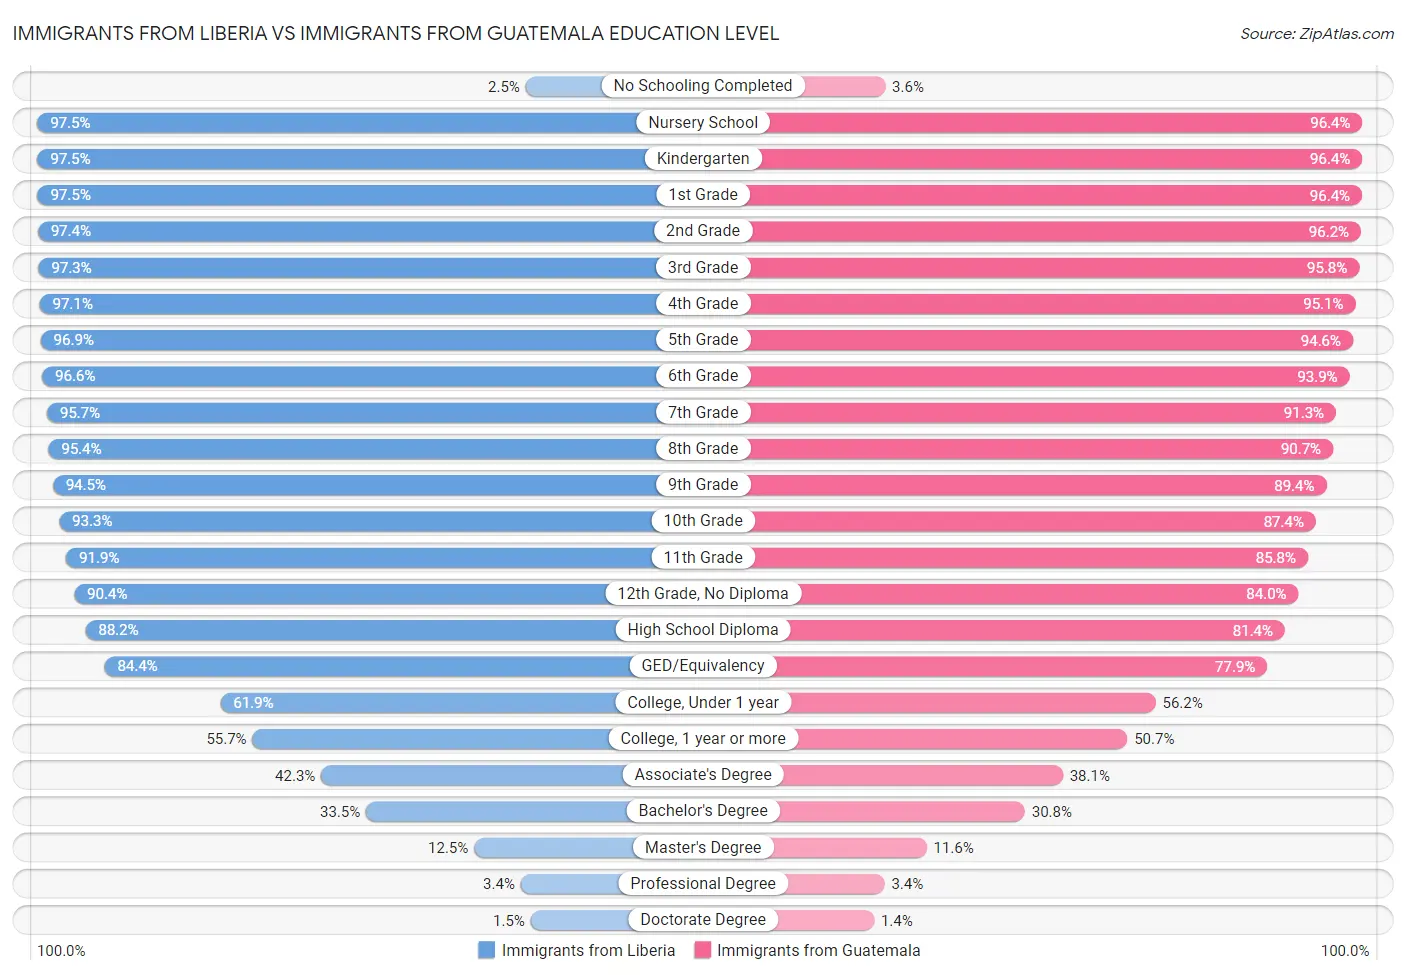 Immigrants from Liberia vs Immigrants from Guatemala Education Level